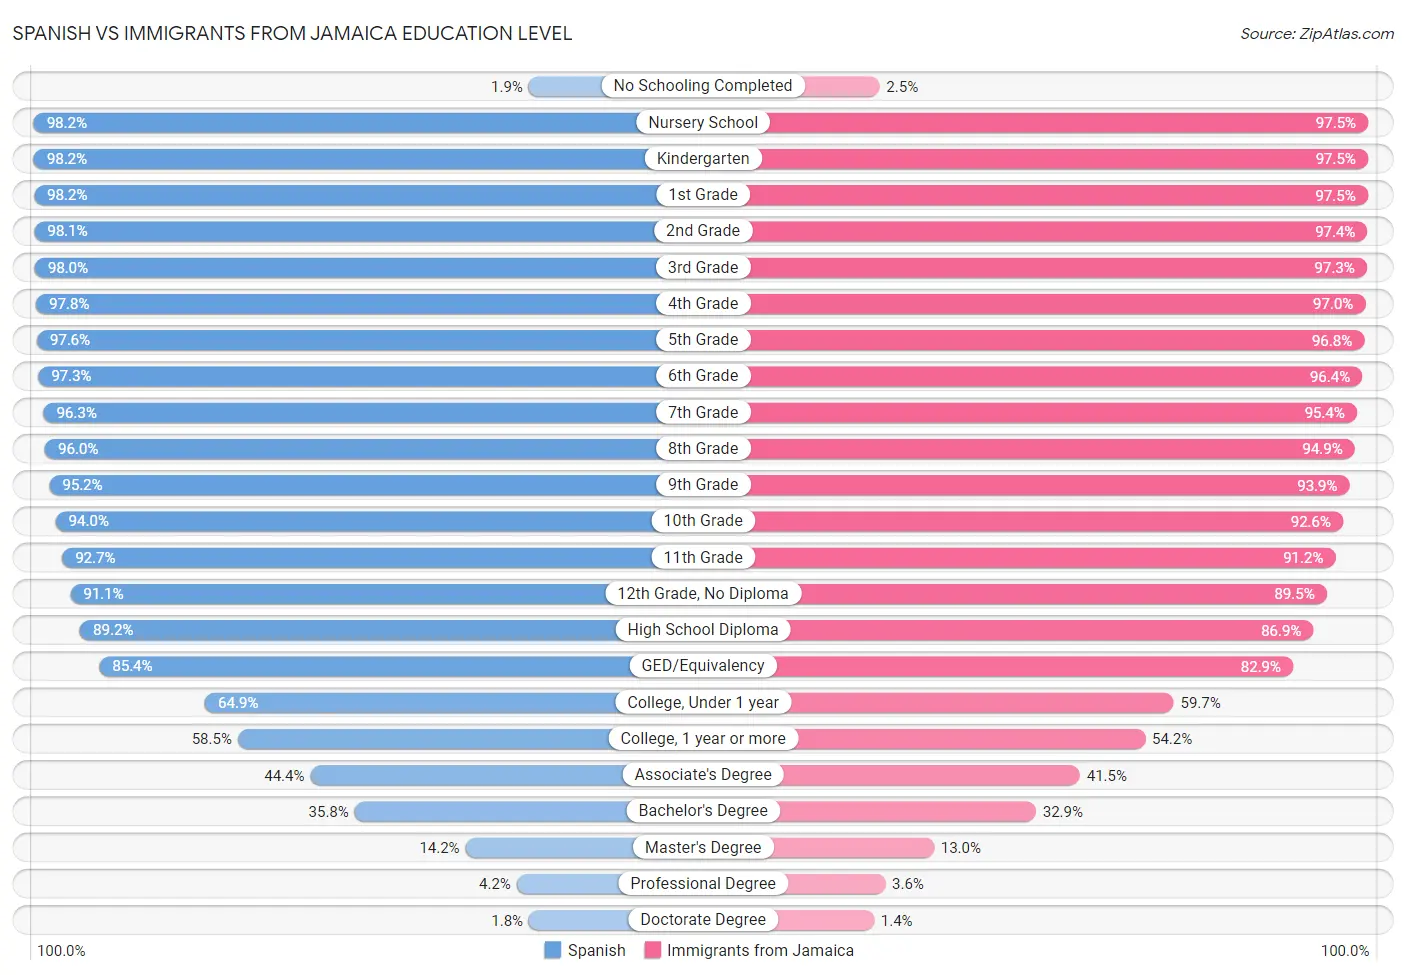 Spanish vs Immigrants from Jamaica Education Level